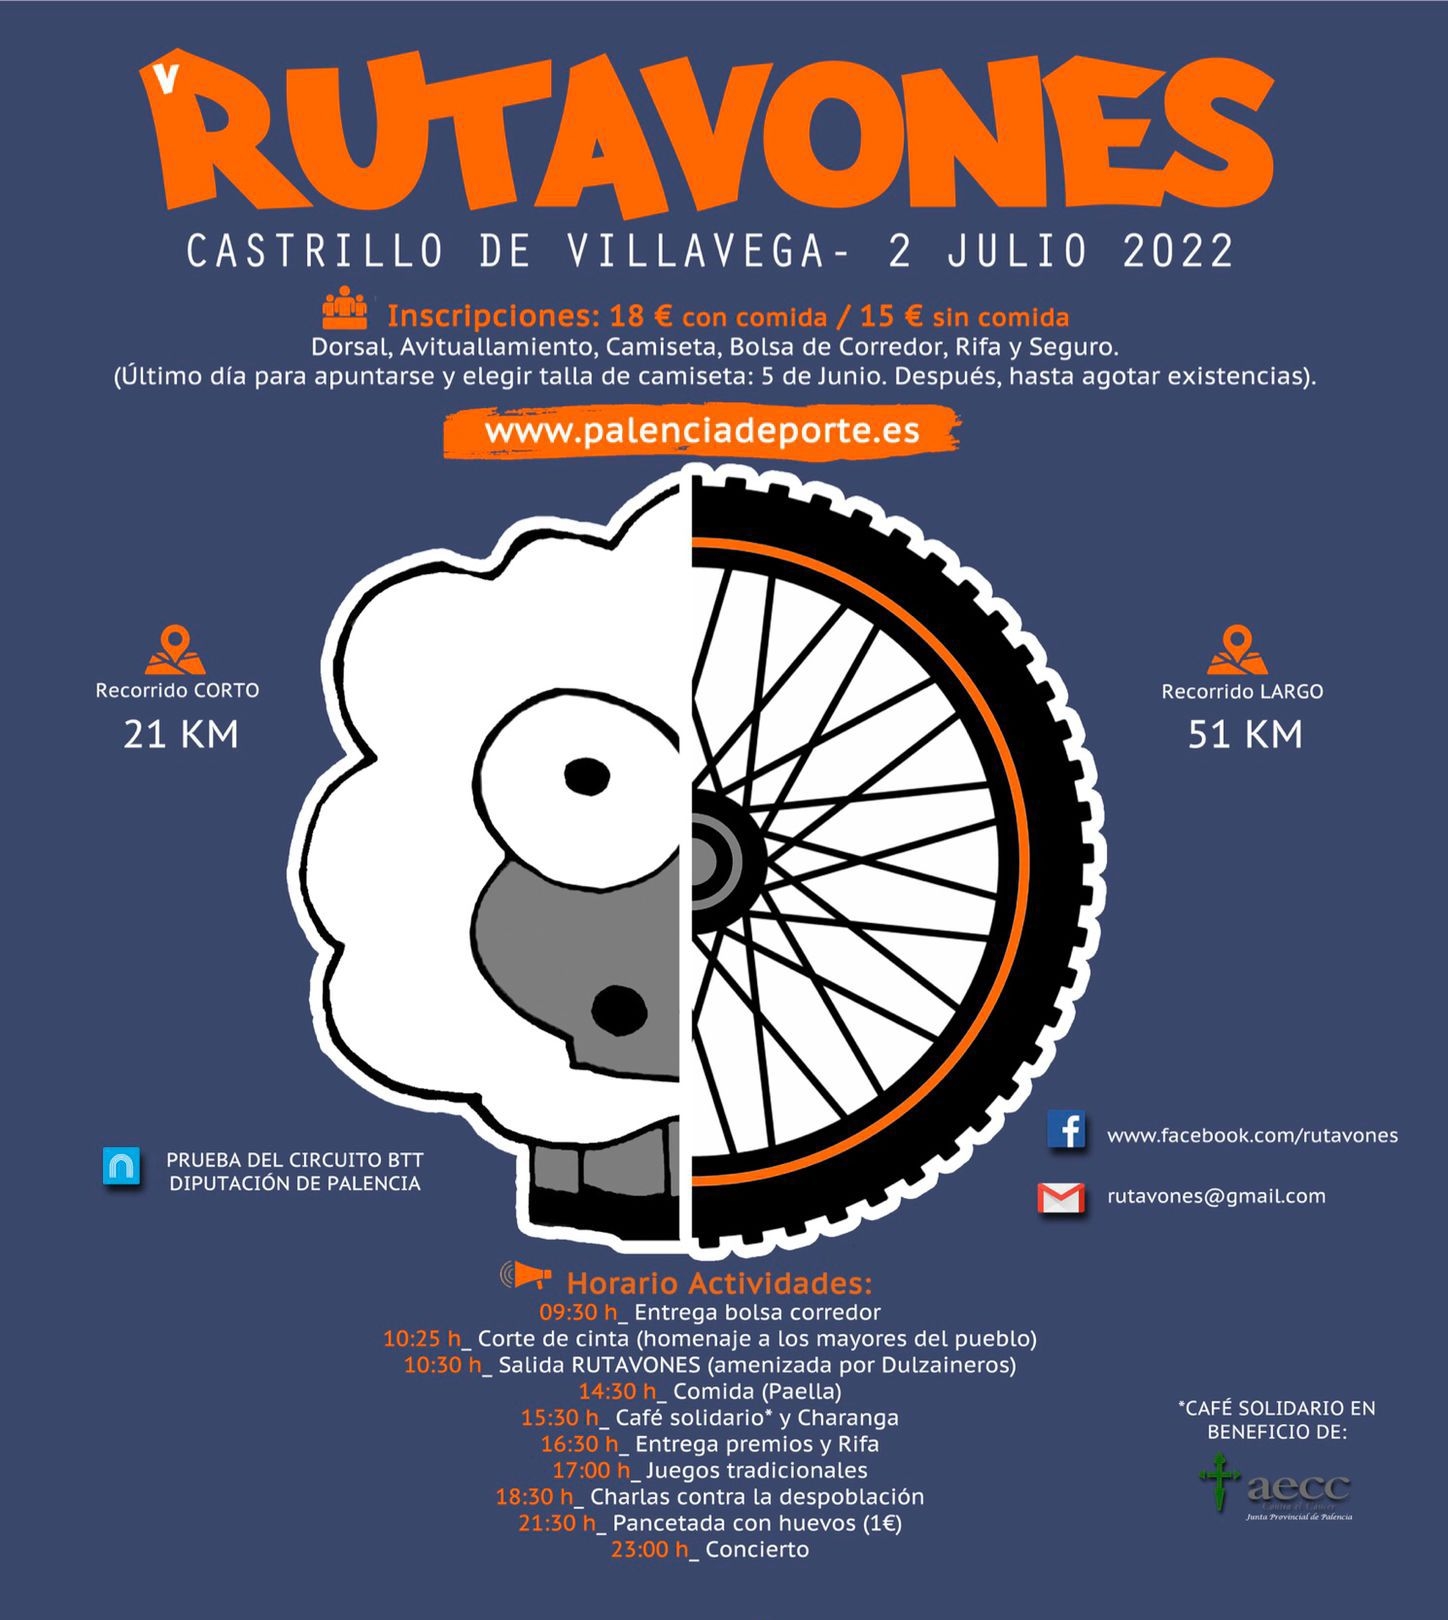 RUTAVONES CASTRILLO DE VILLAVEGA - Register